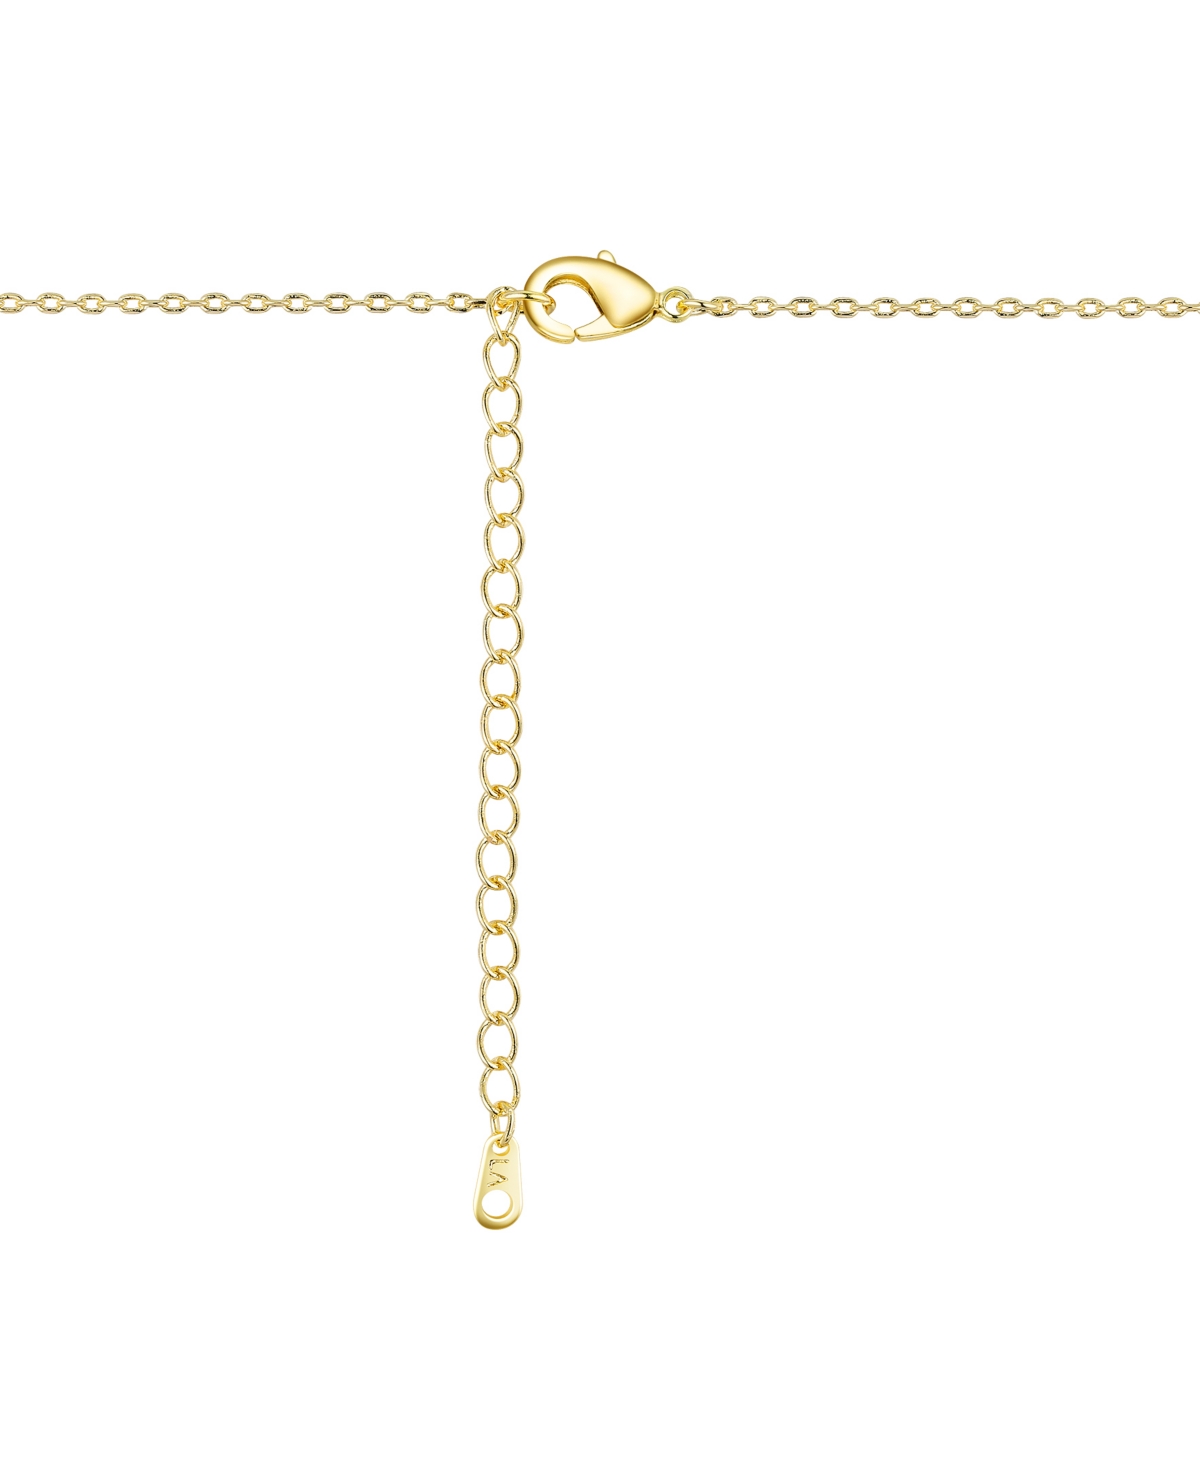 Shop Unwritten 14k Gold Plated Garfield "mama" Necklace